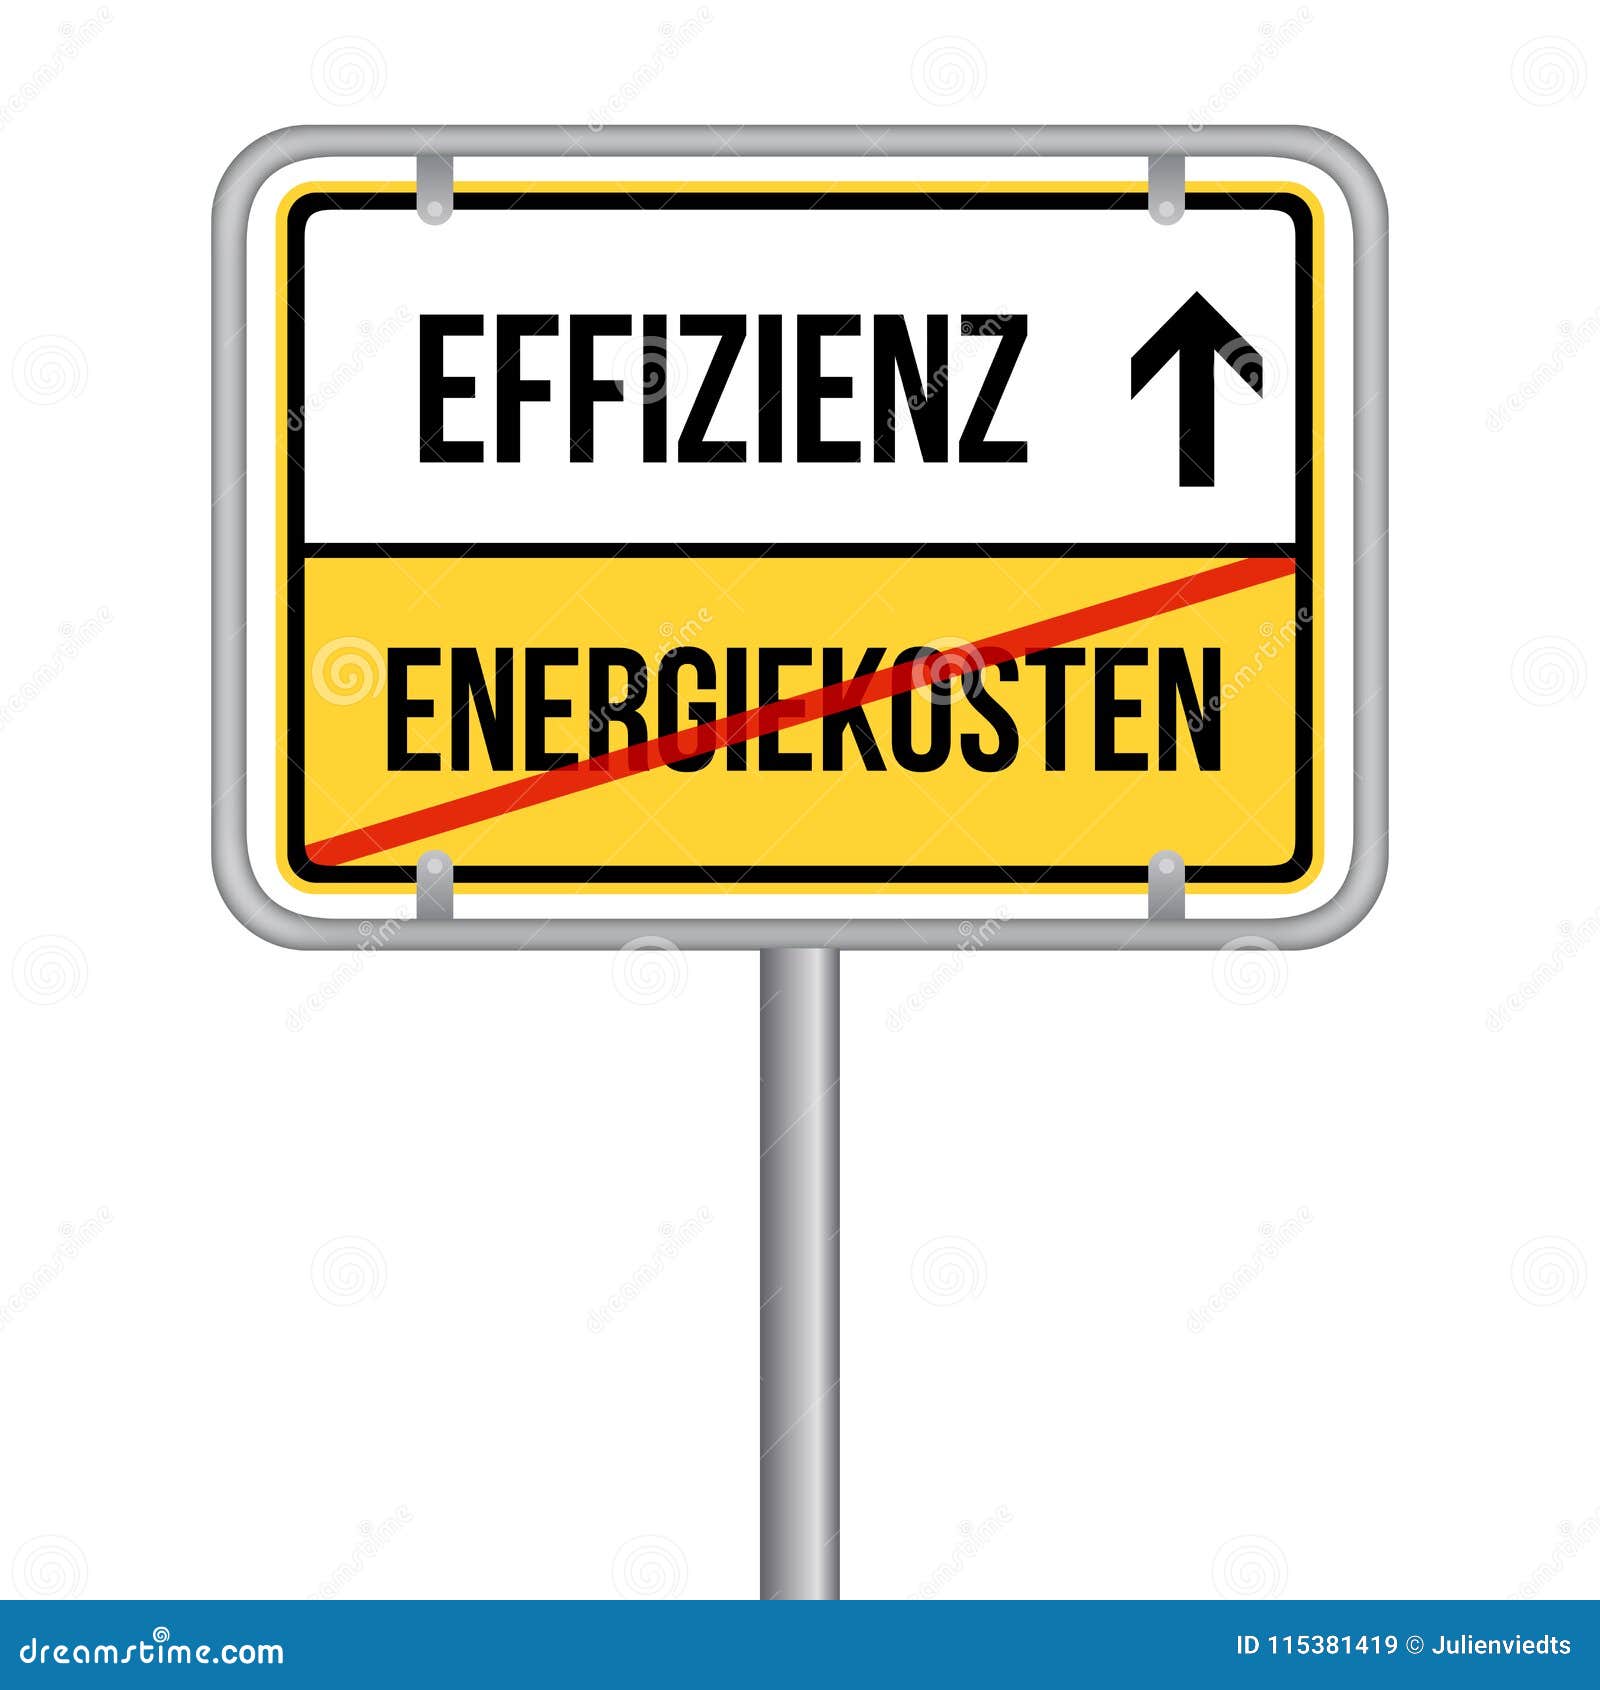 energy costs energy efficiency - german translation: energiekosten effizienz